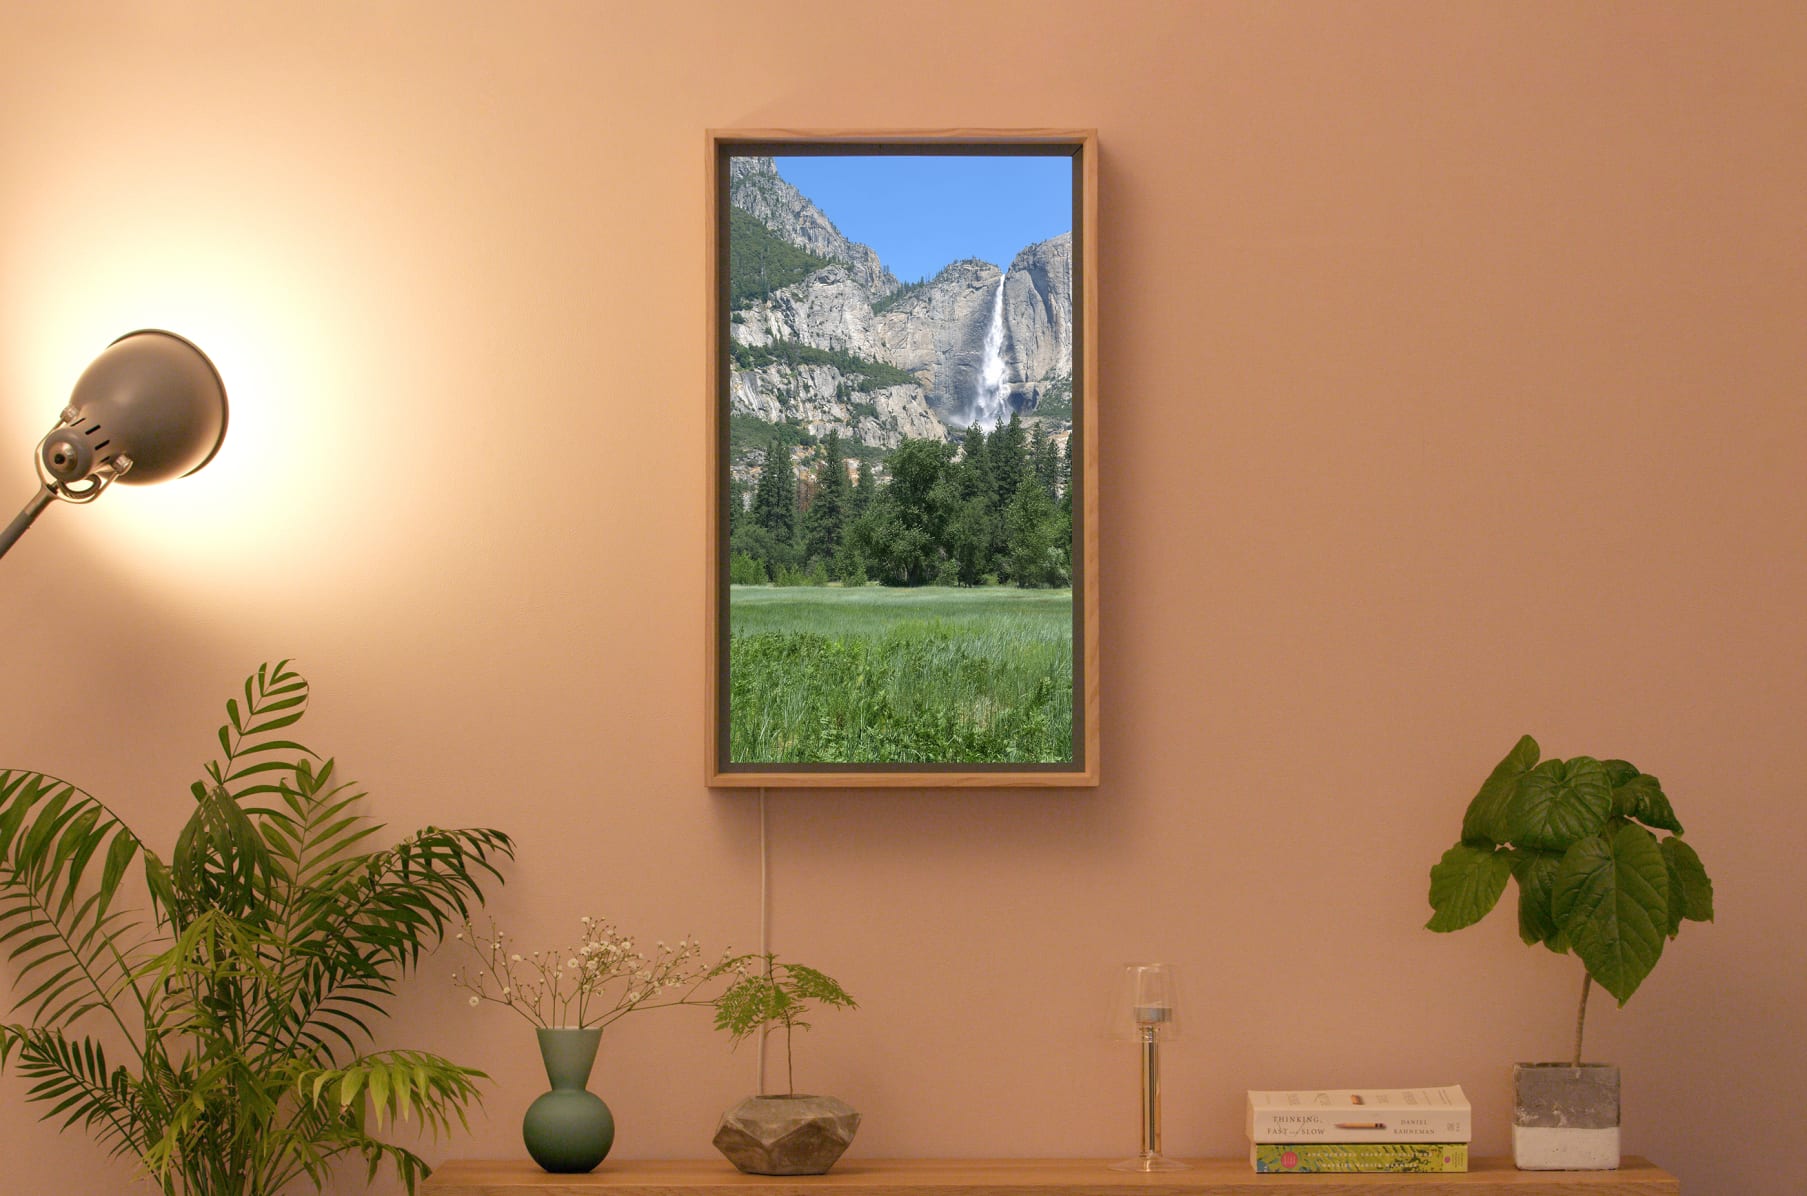 Atmoph Window 2 - Smart display with 1,000 views | Indiegogo